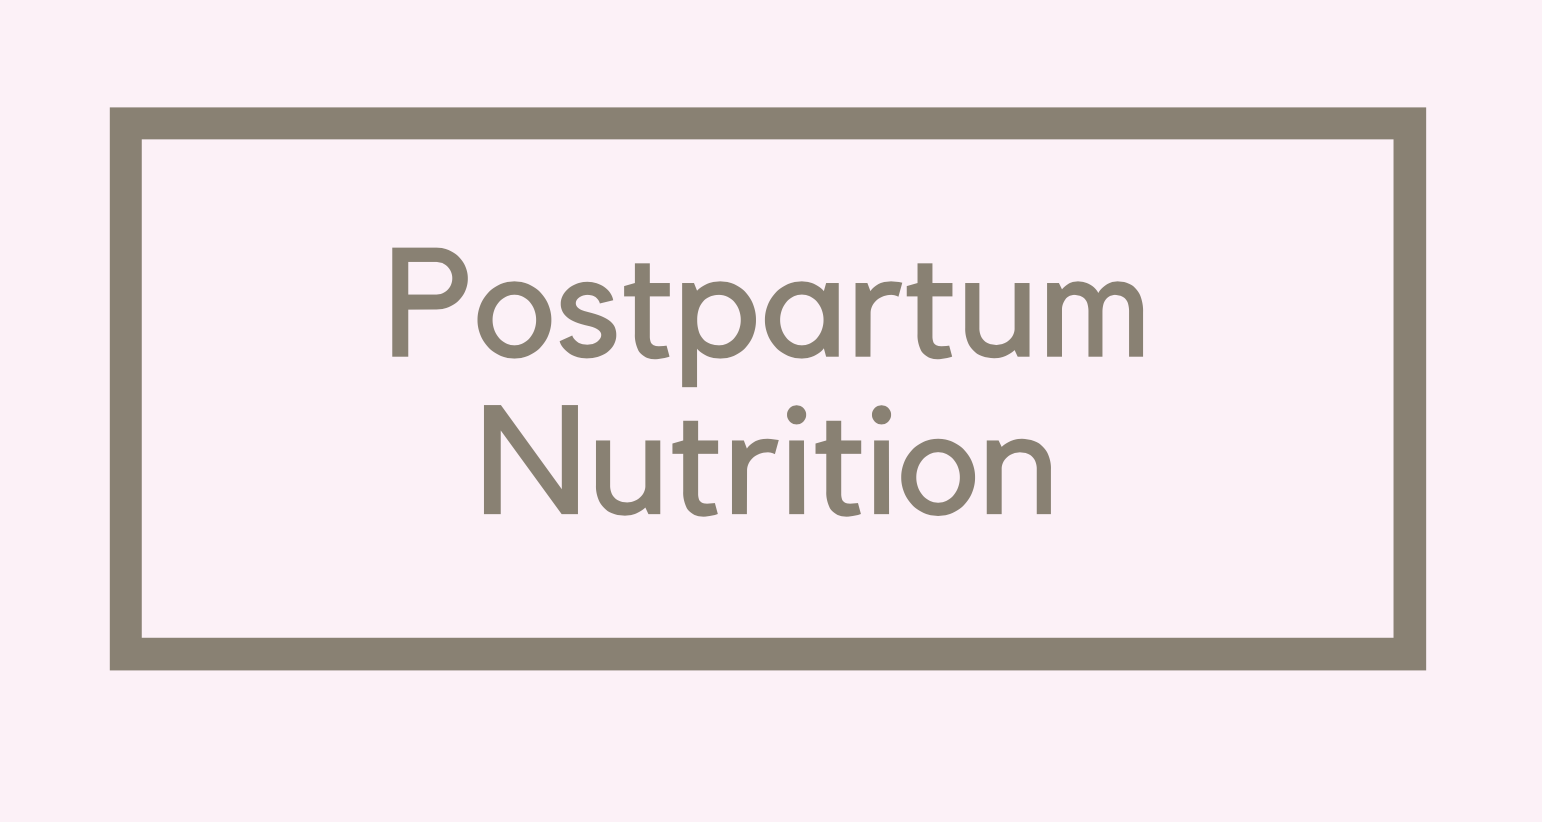 Postpartum Nutrition